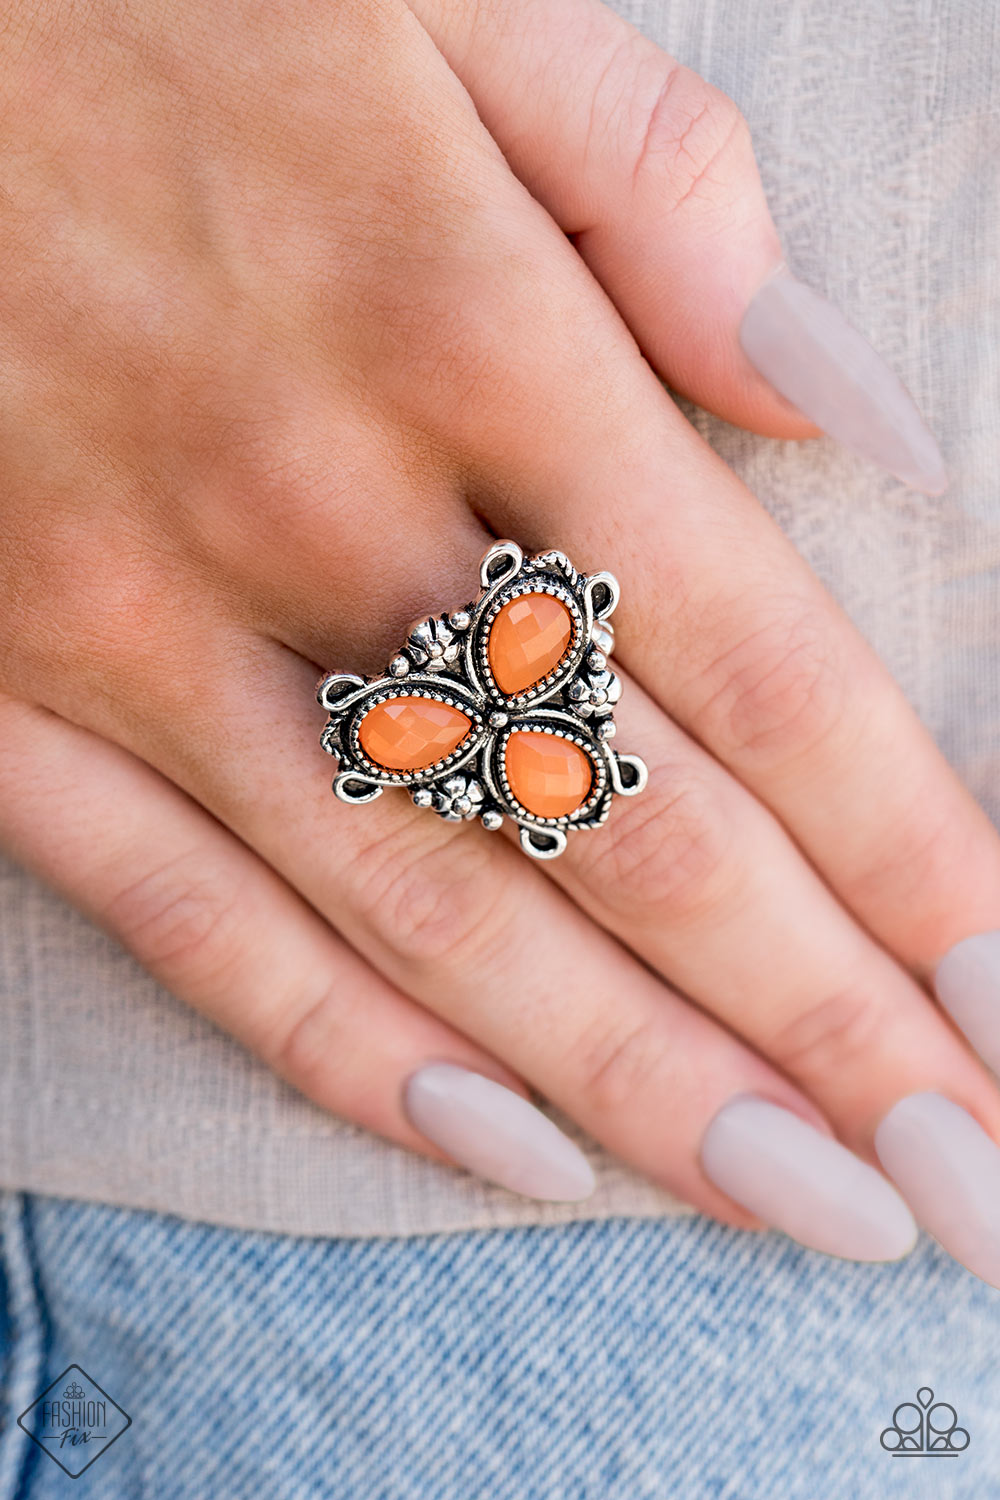 Ambrosial Garden Orange Ring - Daria's Blings N Things